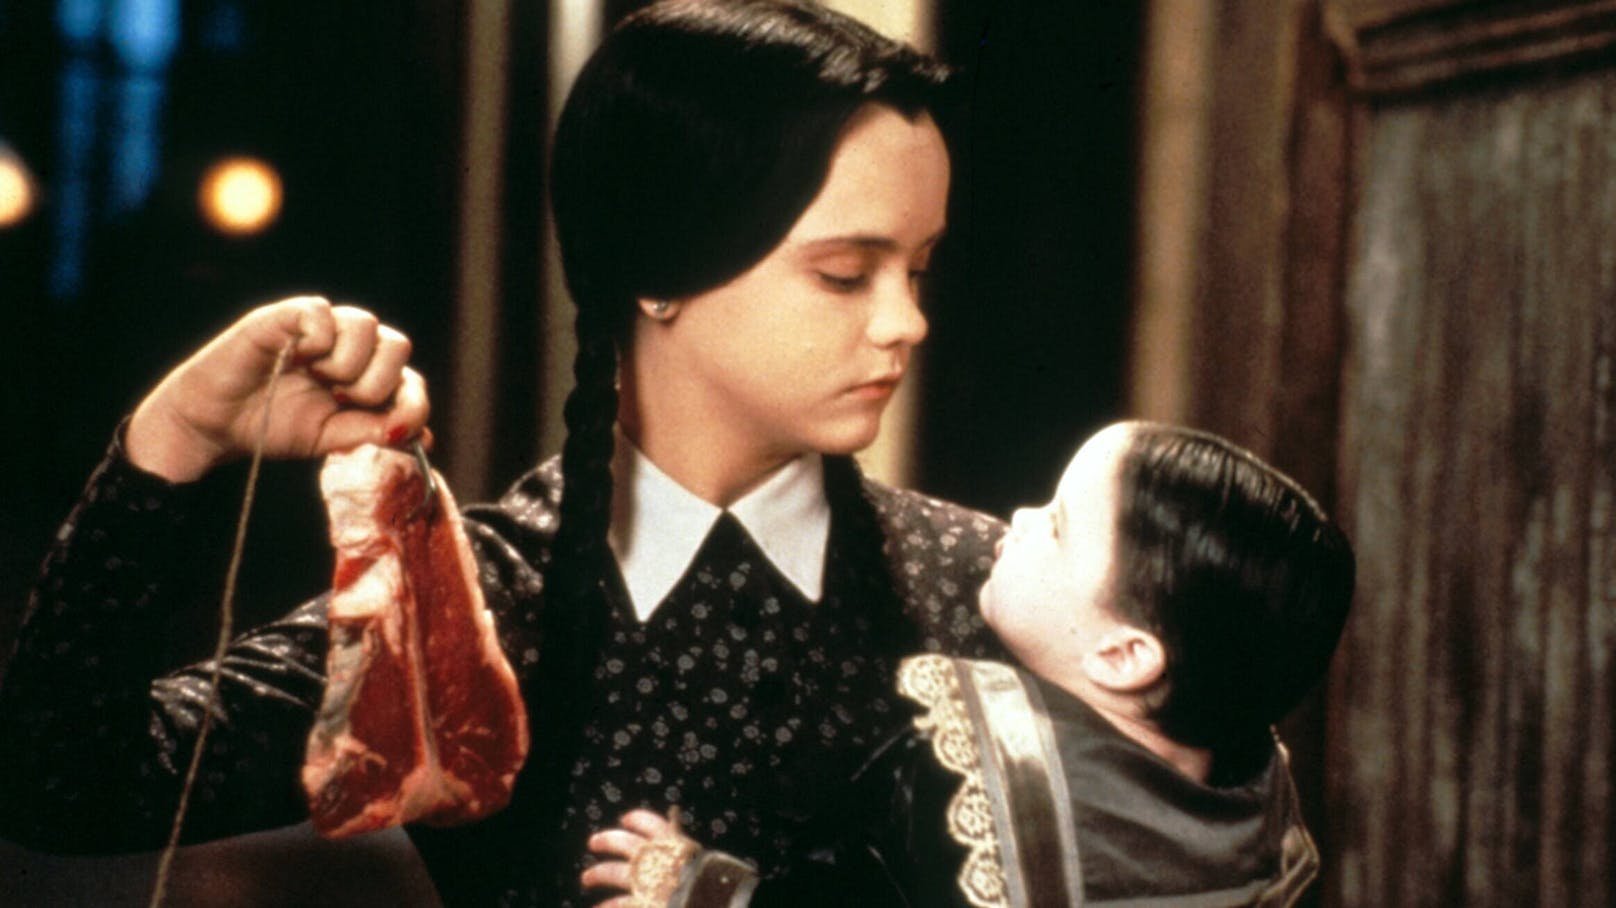 Die neue "Addams Family"-Serie soll Tochter <strong>Wednesday Addams</strong> in den Mittelpunkt rücken.